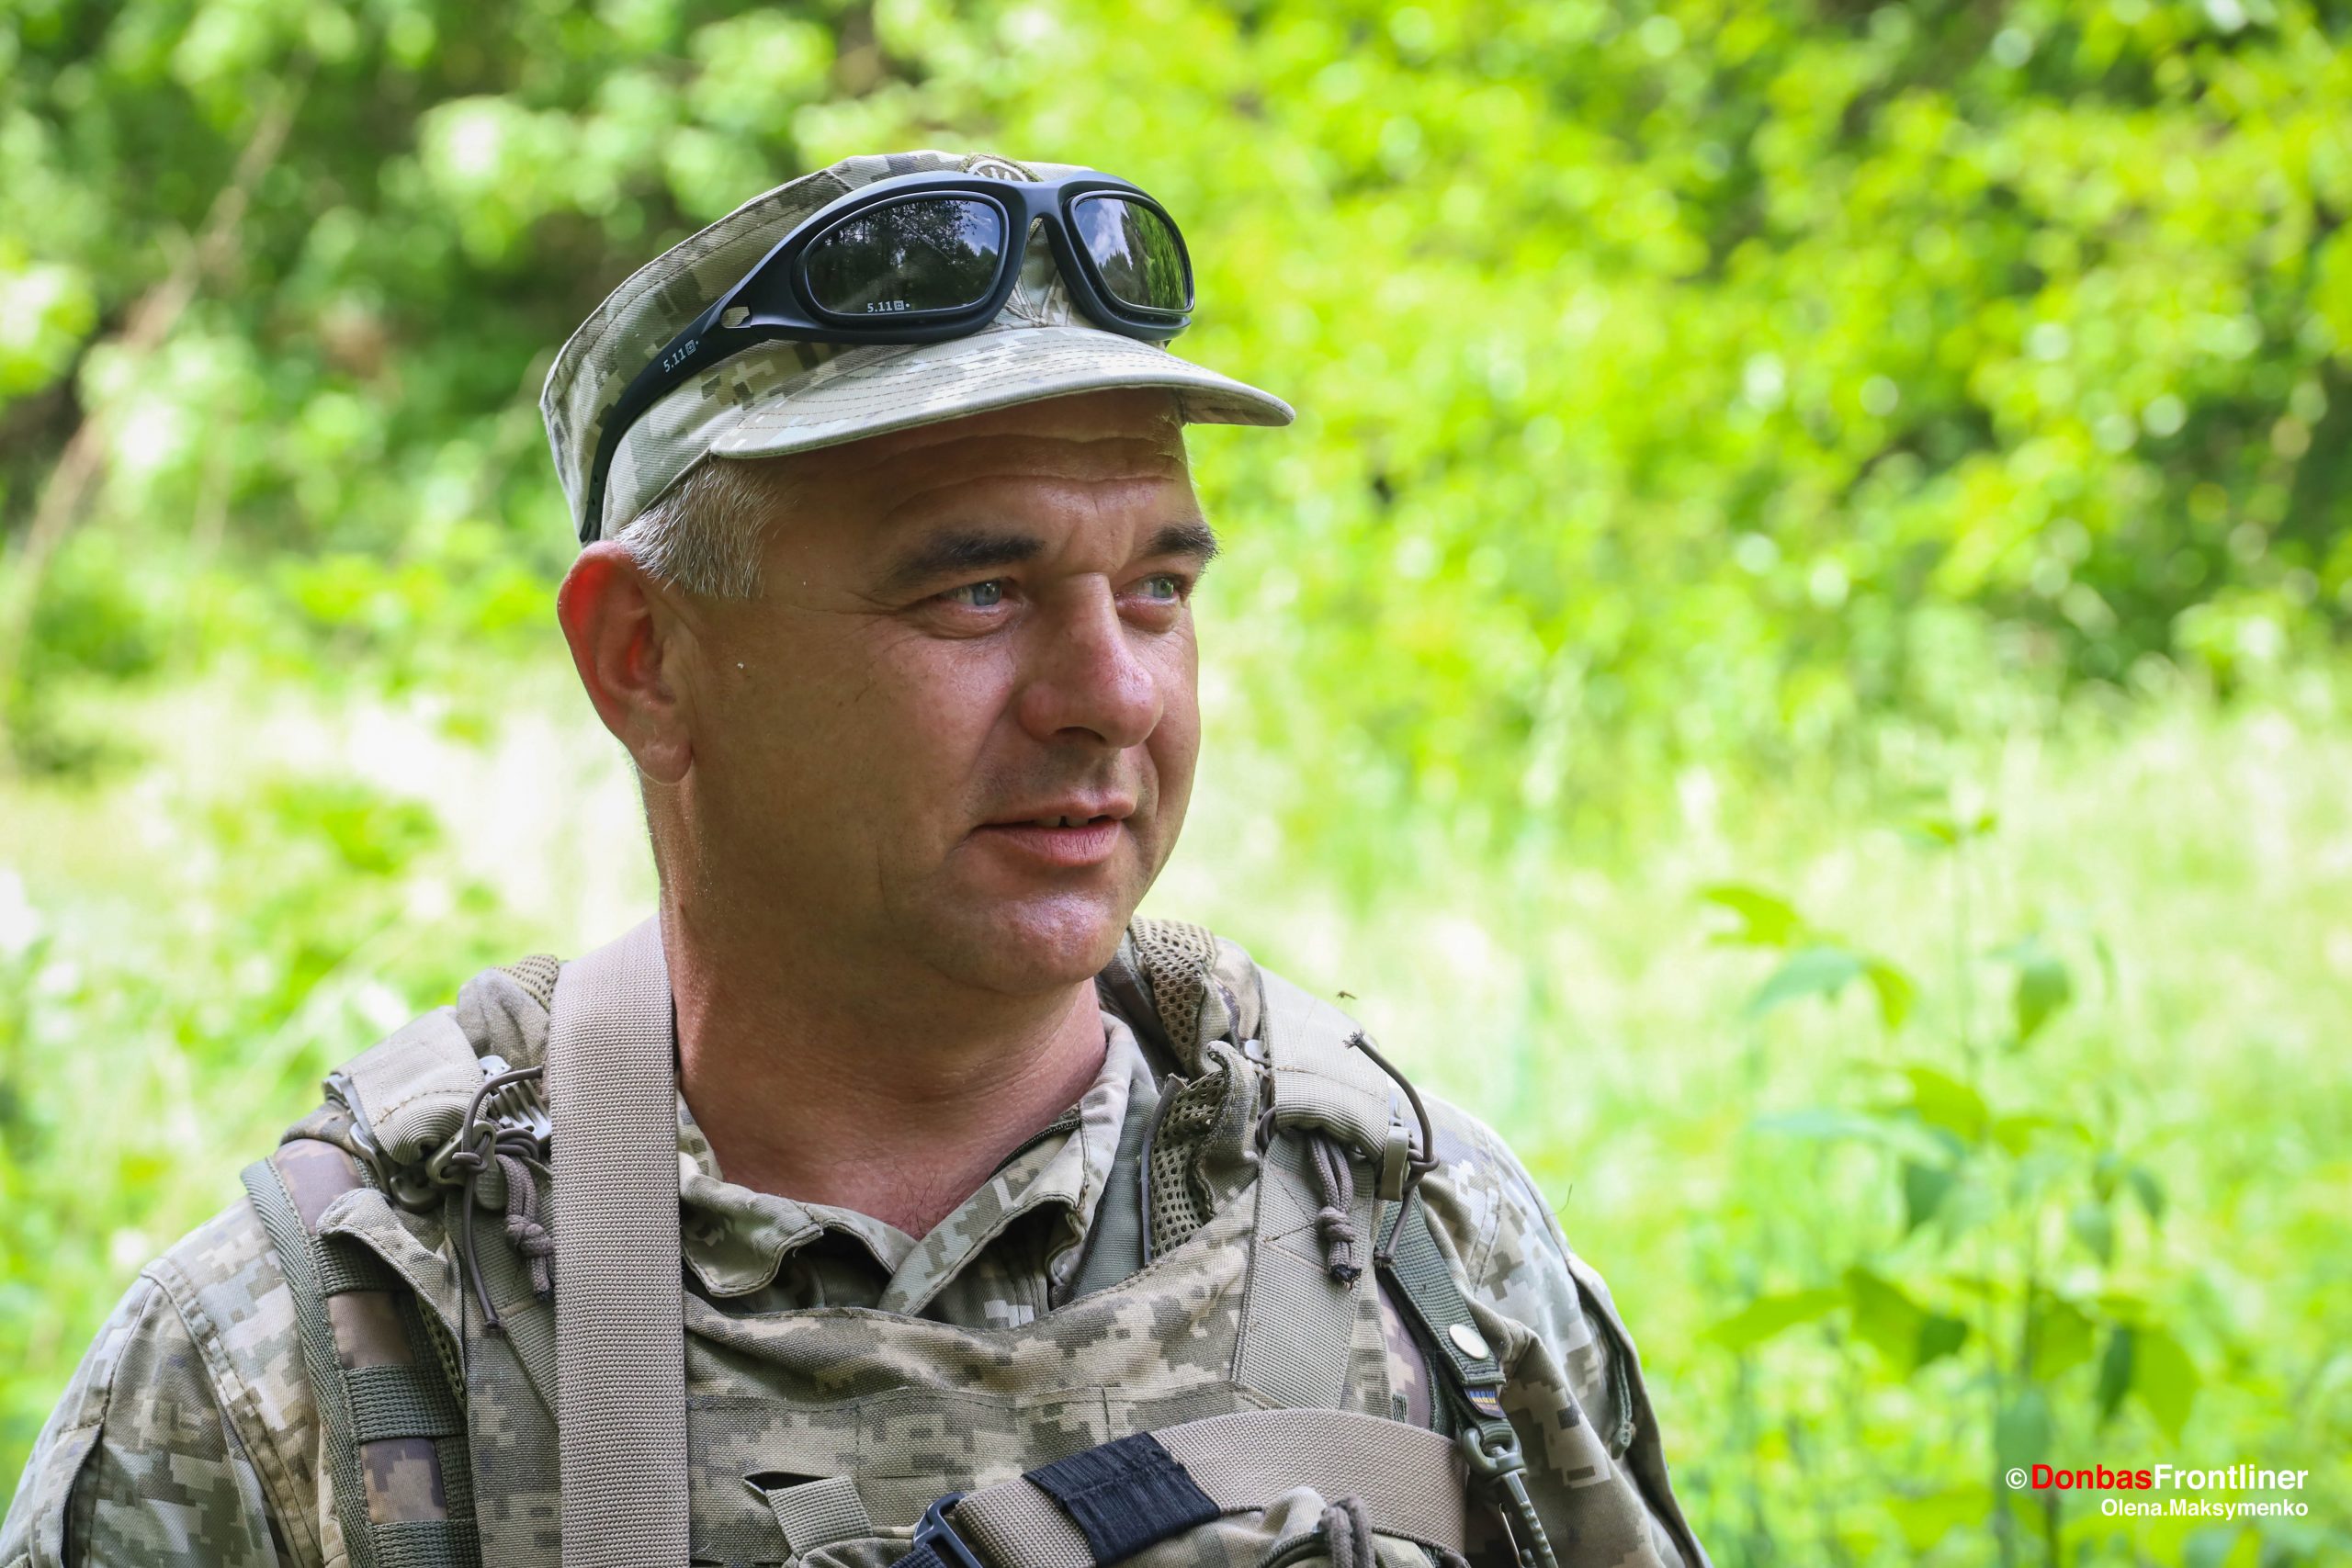 Donbas Frontliner / Штурмовик-прикордонник Олег Федорович, вчорашній наглядач маяка